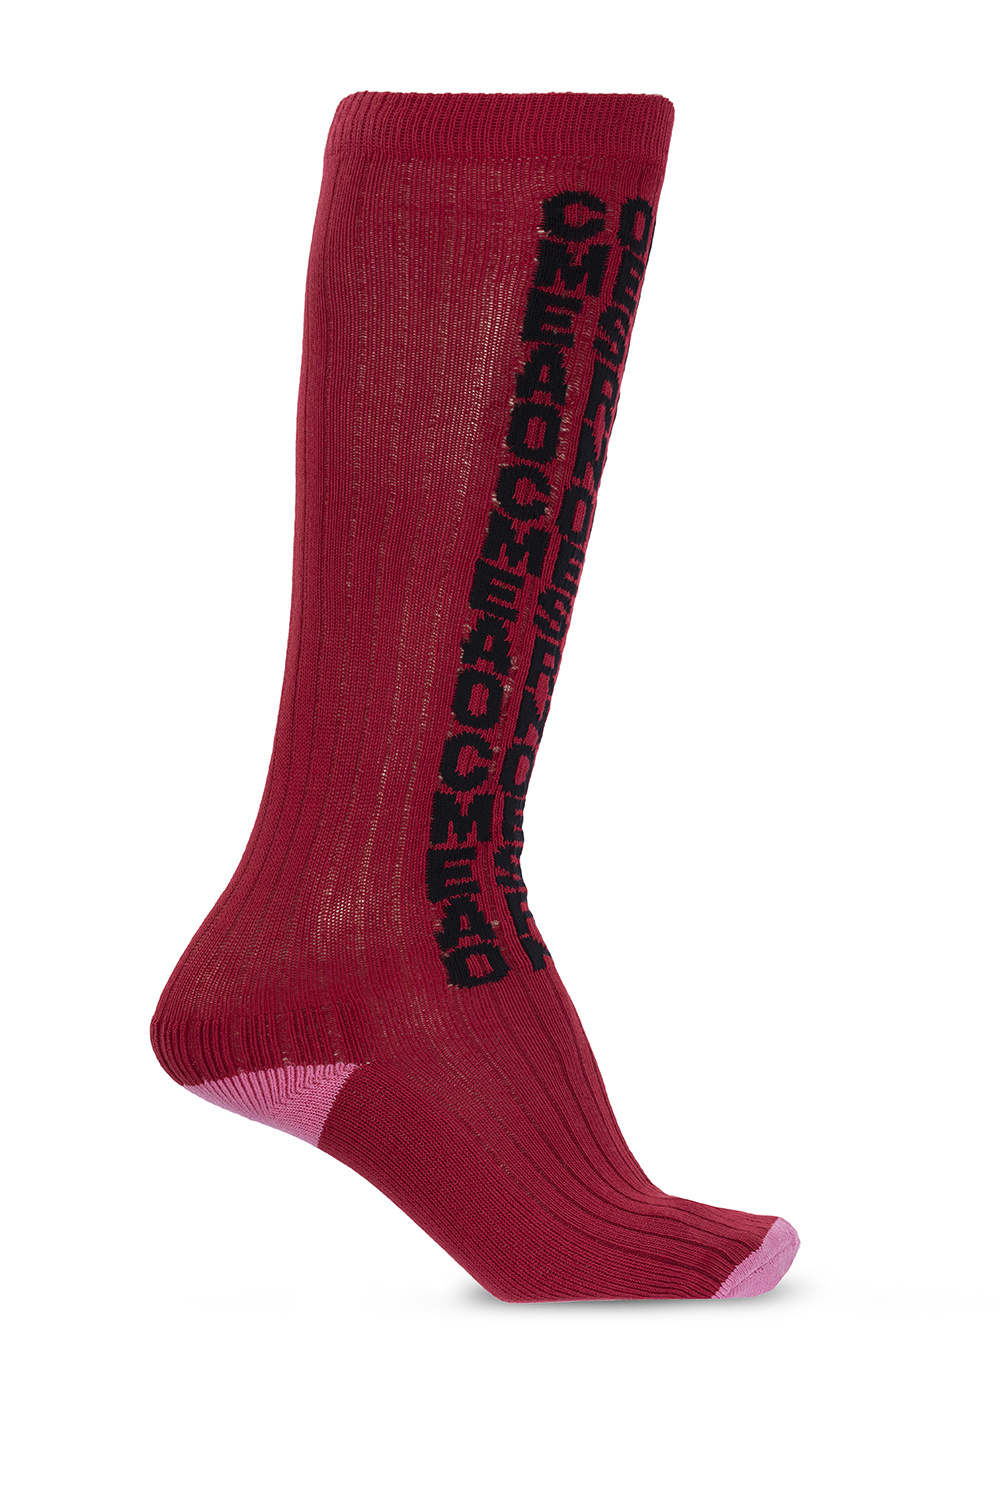 Comme des Garcons Homme Plus Long socks with logo